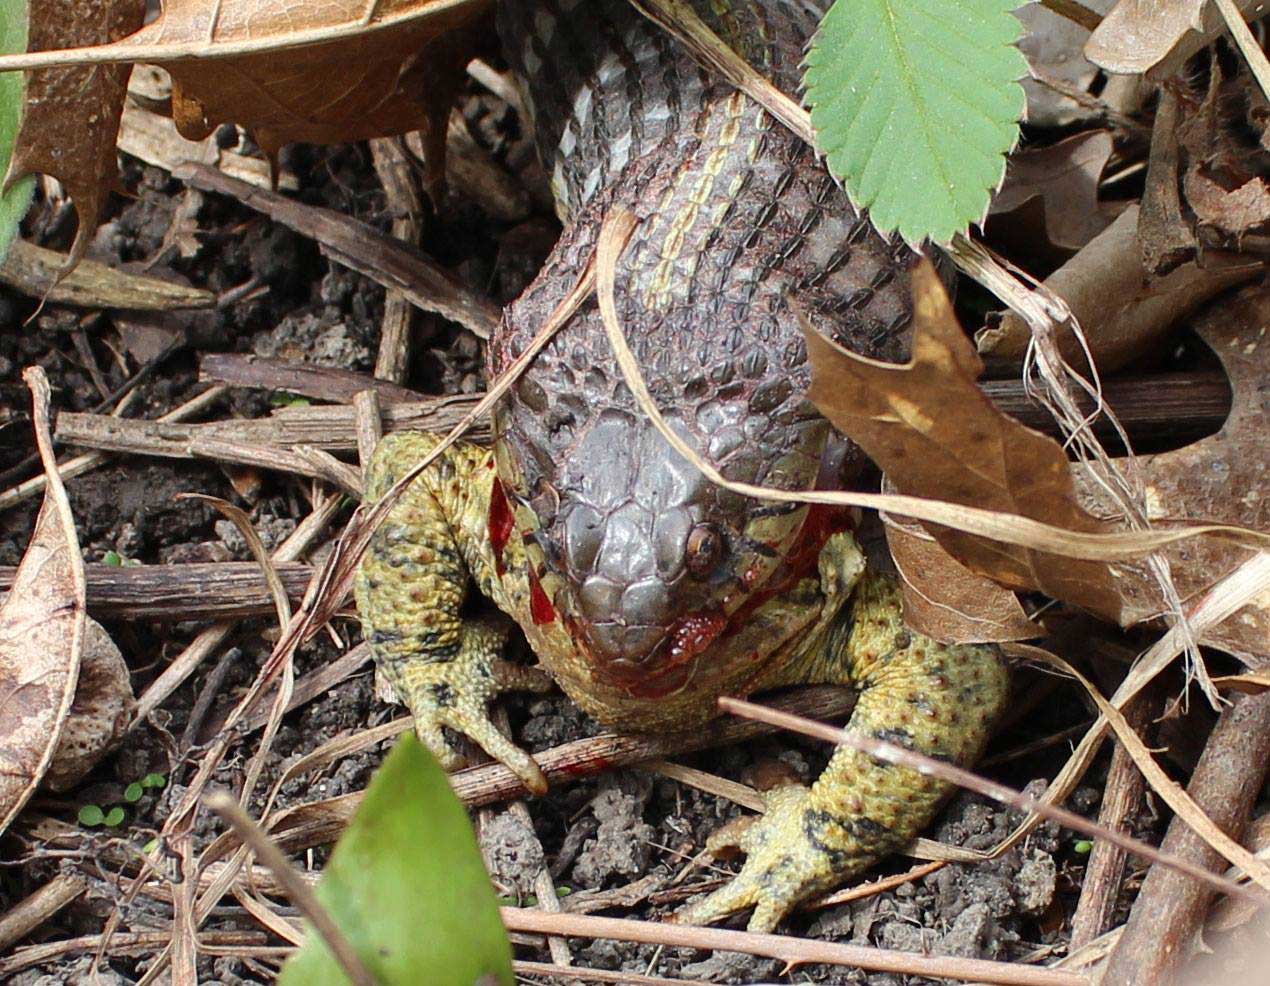 A garter snake eating a frog.